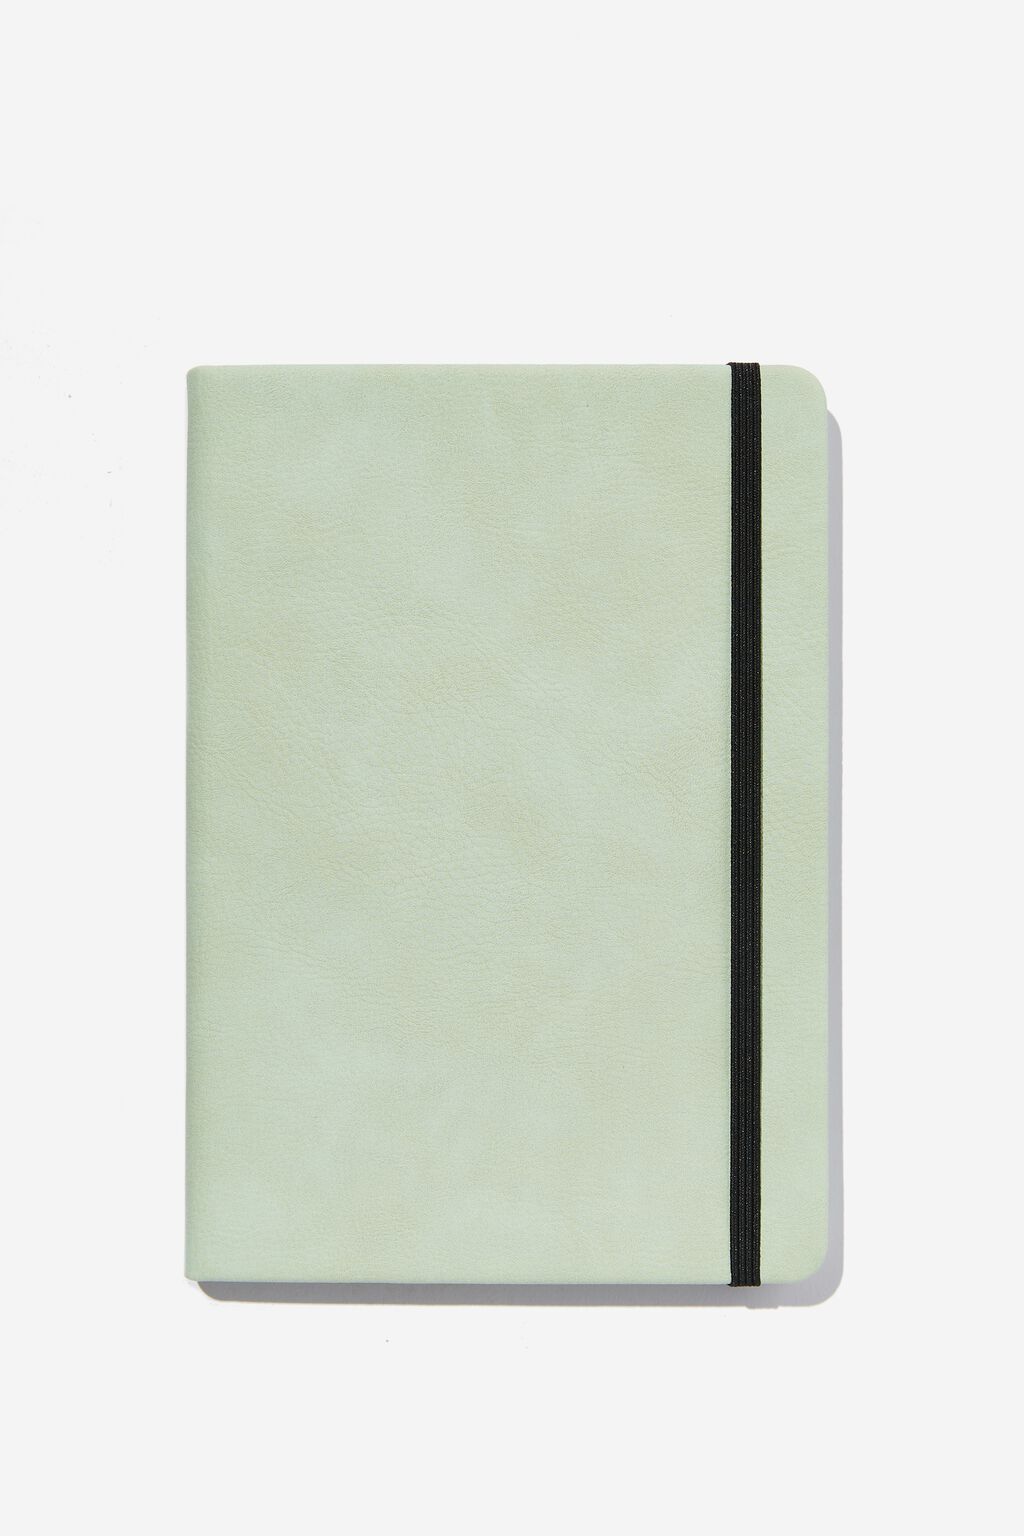 Typo mint green journal